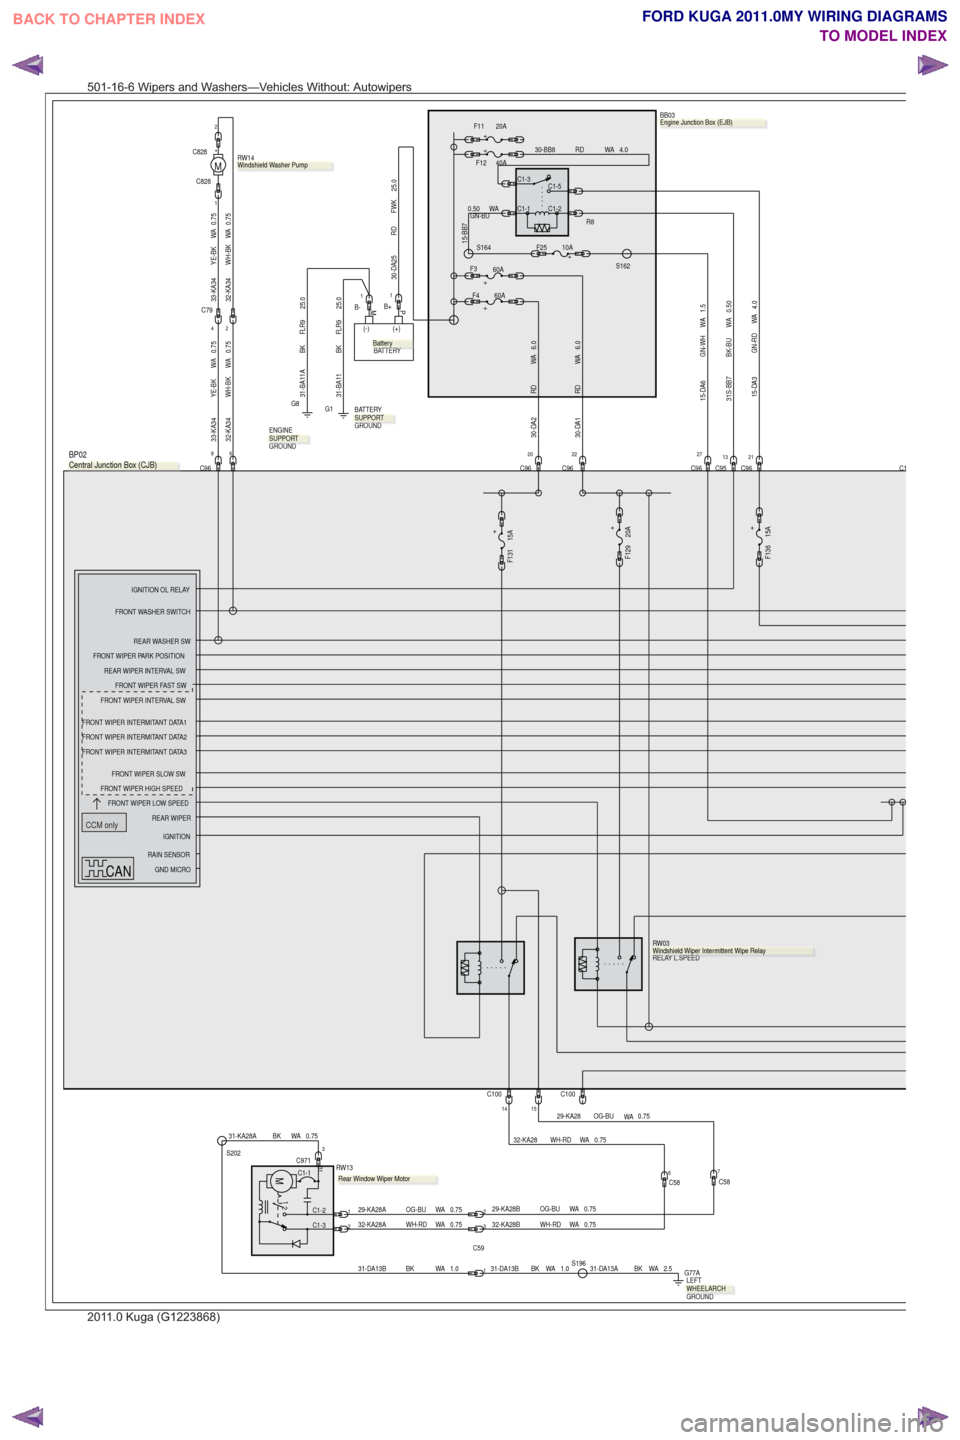 FORD KUGA 2011 1.G Wiring Diagram Workshop Manual CCM only
C96
96
+
F129 20A
+
F131 15A
32-KA28 WH-RD WA 0.75
1514C100
C9513C121C96
C1-5
C1-1
C1-3
C1-2R8.
BB03
PM
(+)
(-)
BATTERY
25.0
FWK
RD
30-DA25
1.5
WA
GN-WH
15-DA6
15-DA3 GN-RD WA 4.0
6.0
WA
RD
3